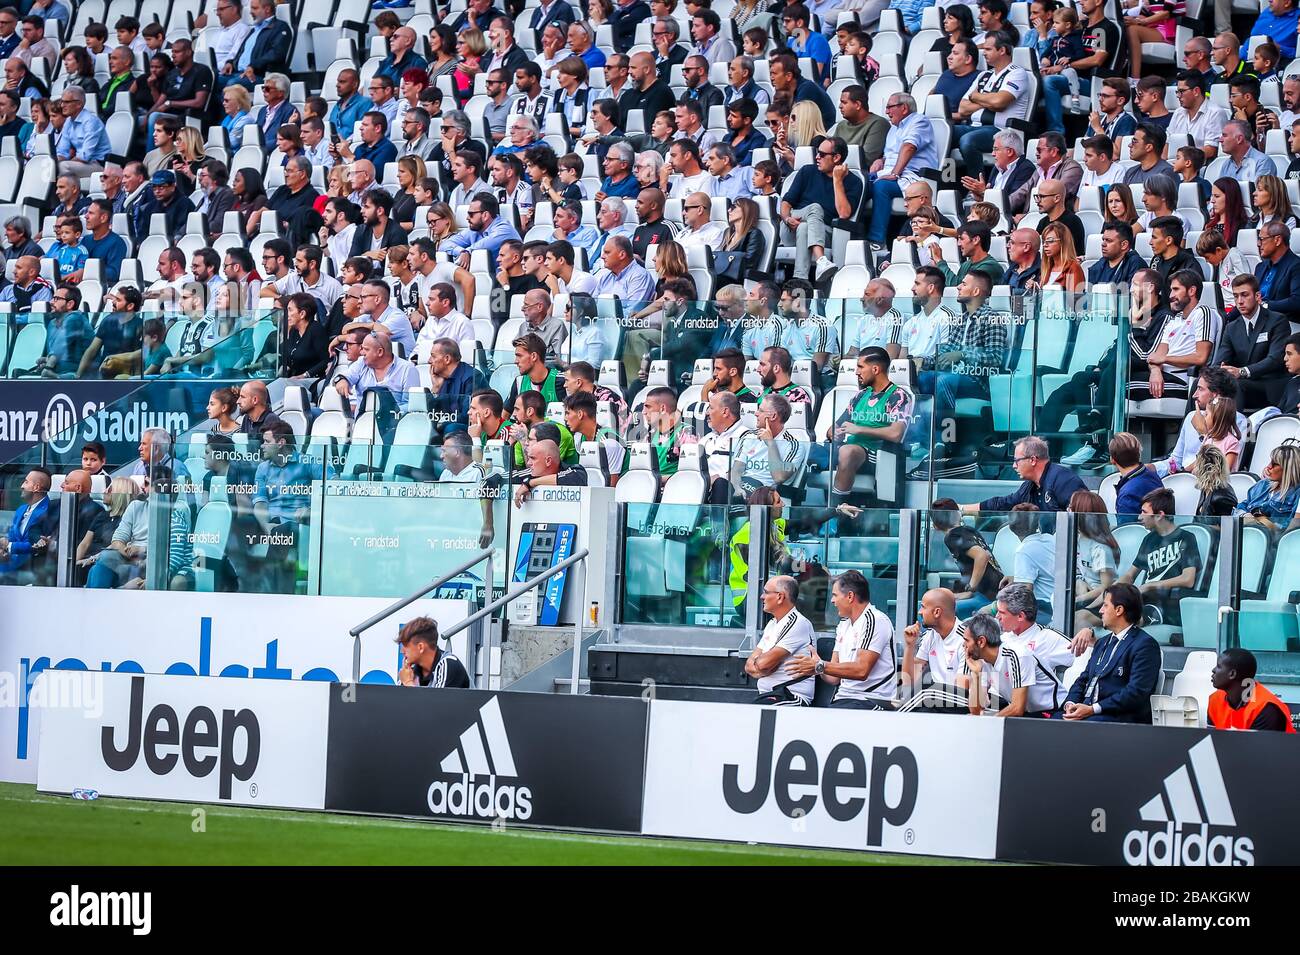 Juventus bench during soccer season 2019/20 symbolic images - Photo credit Fabrizio Carabelli /LM/ Stock Photo